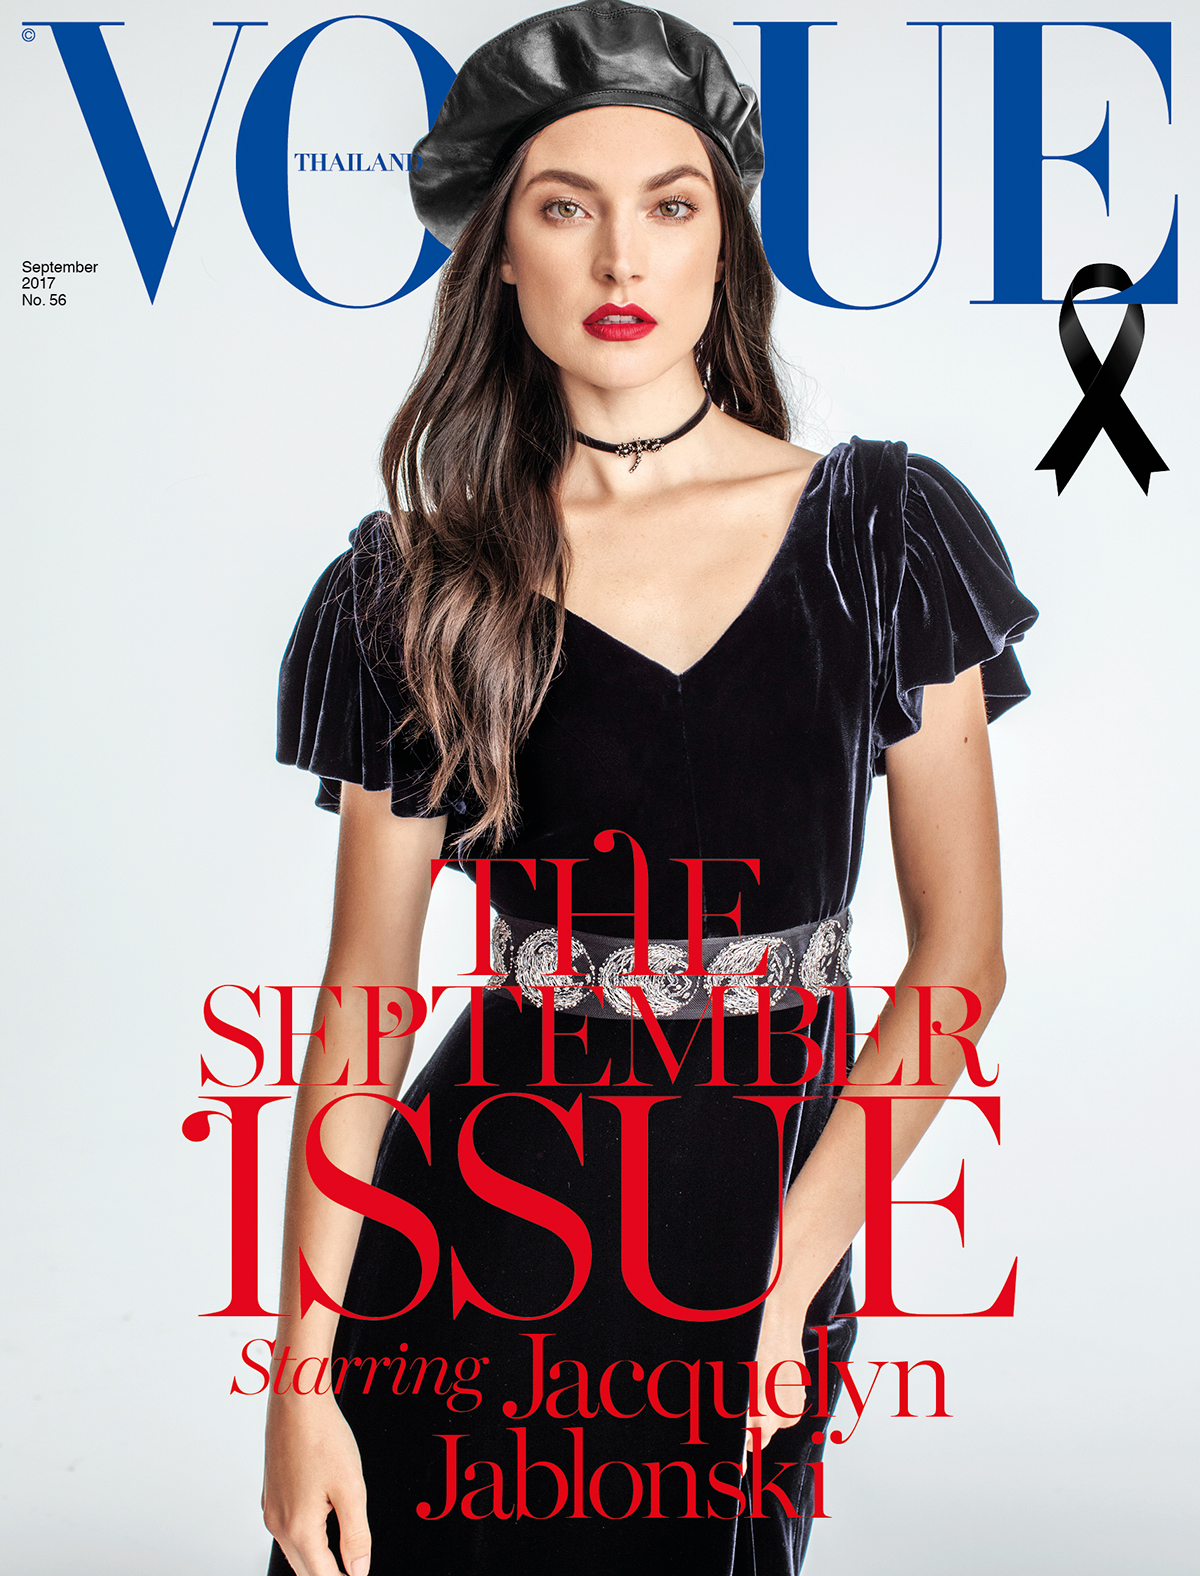 Vogue Thailand Sep 2017 Russell James on Behance